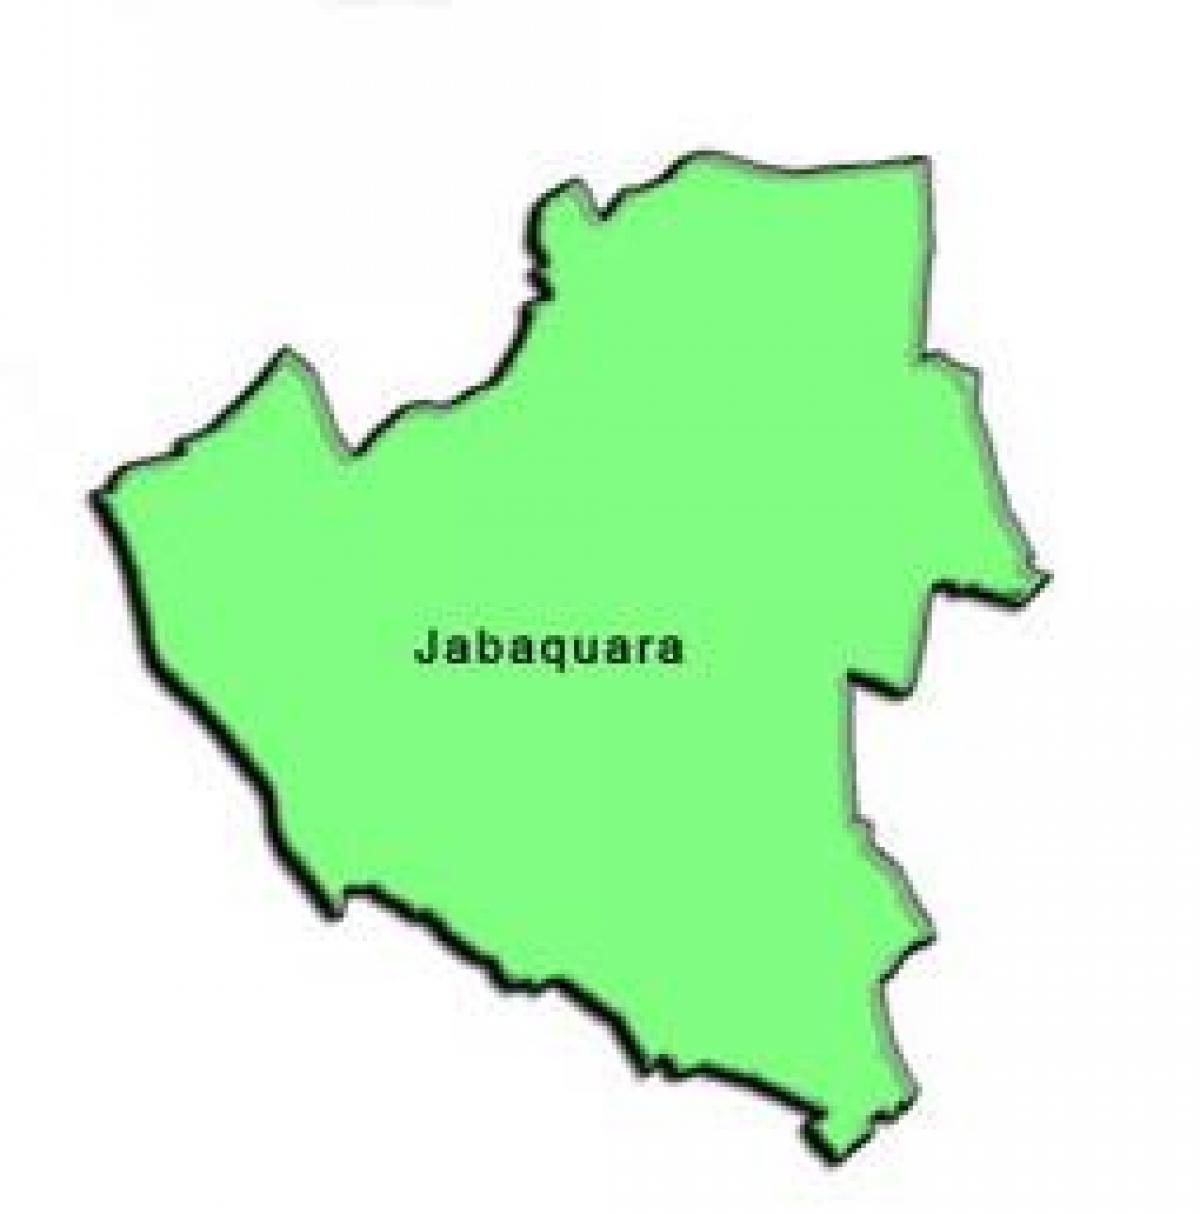 Jabaquara alt harita-Valilik